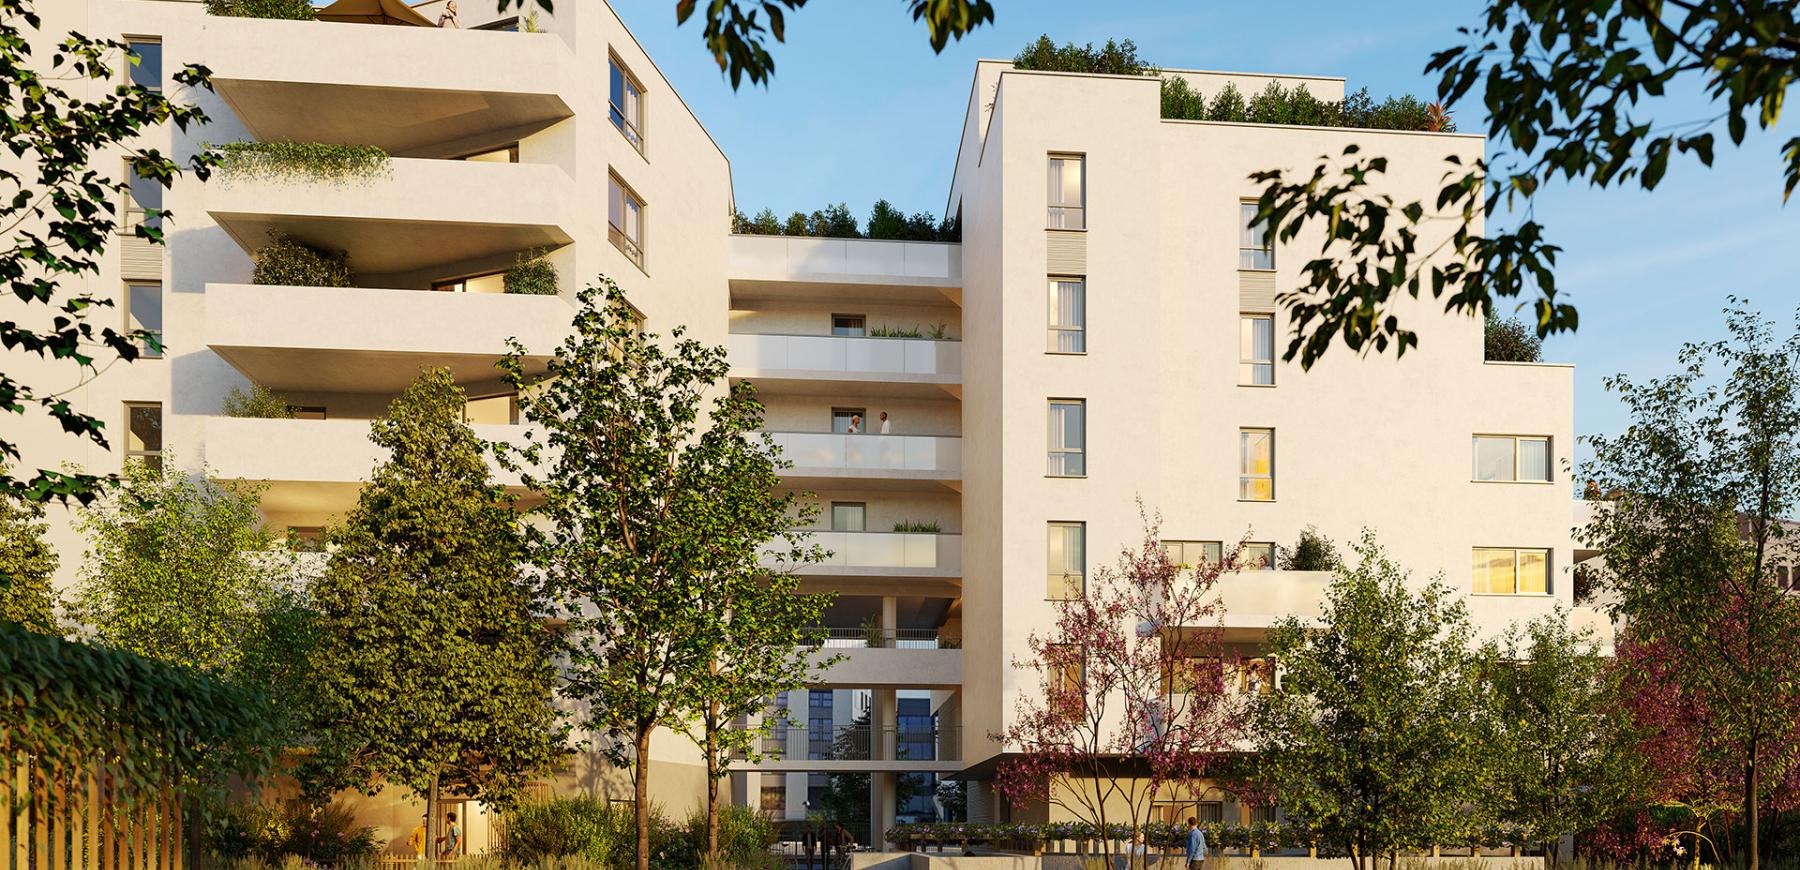 Appartements neufs à Villeurbanne